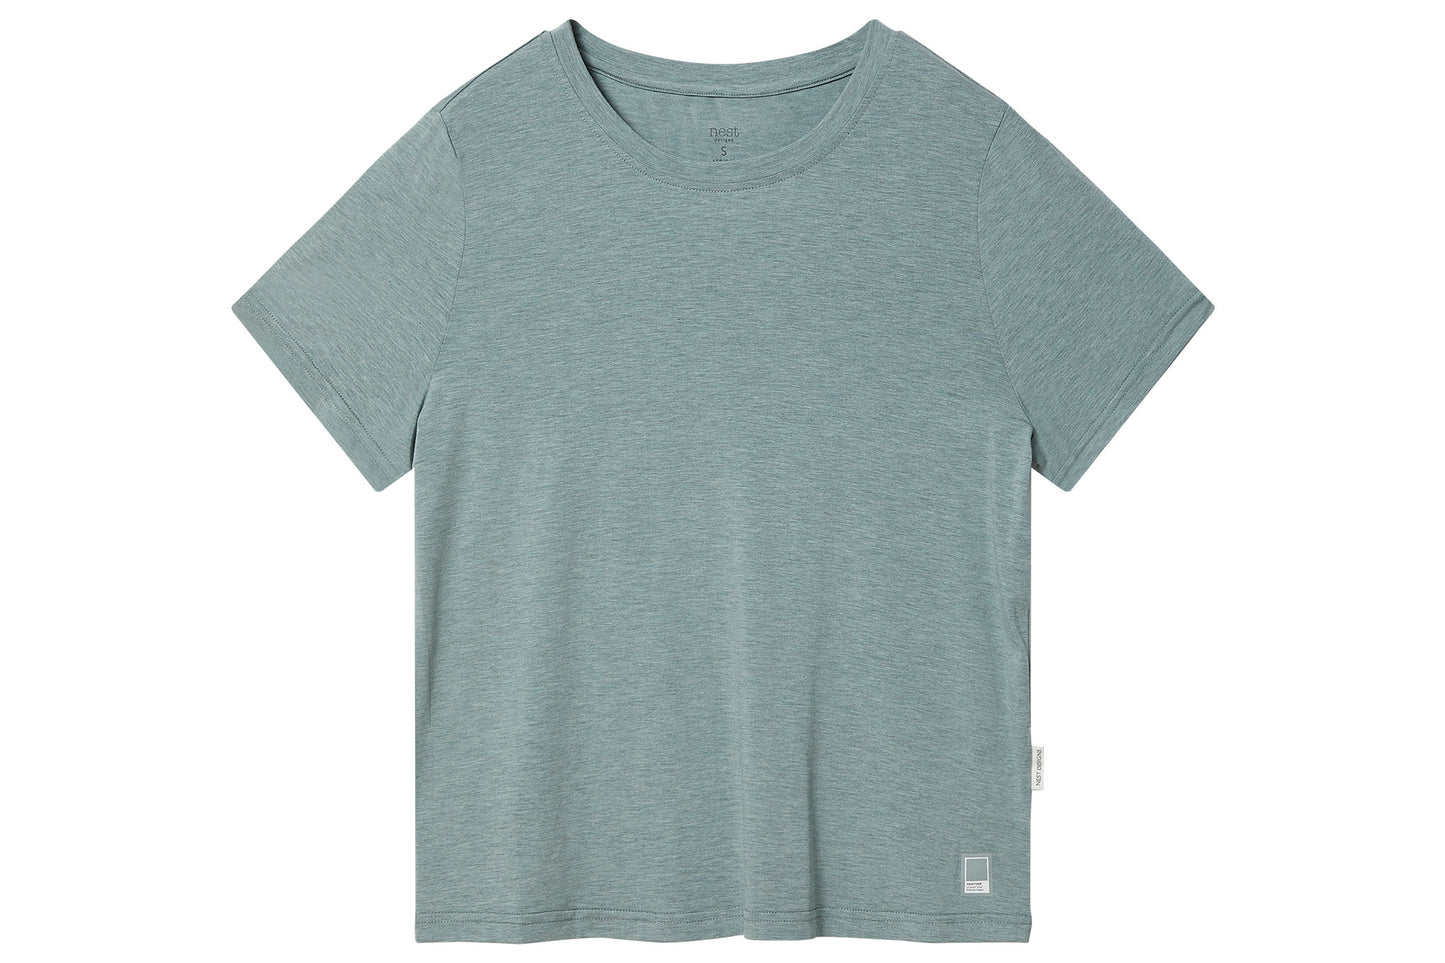 Short Sleeve Women's T-Shirt (Bamboo Jersey) - Pantone Chinois Green